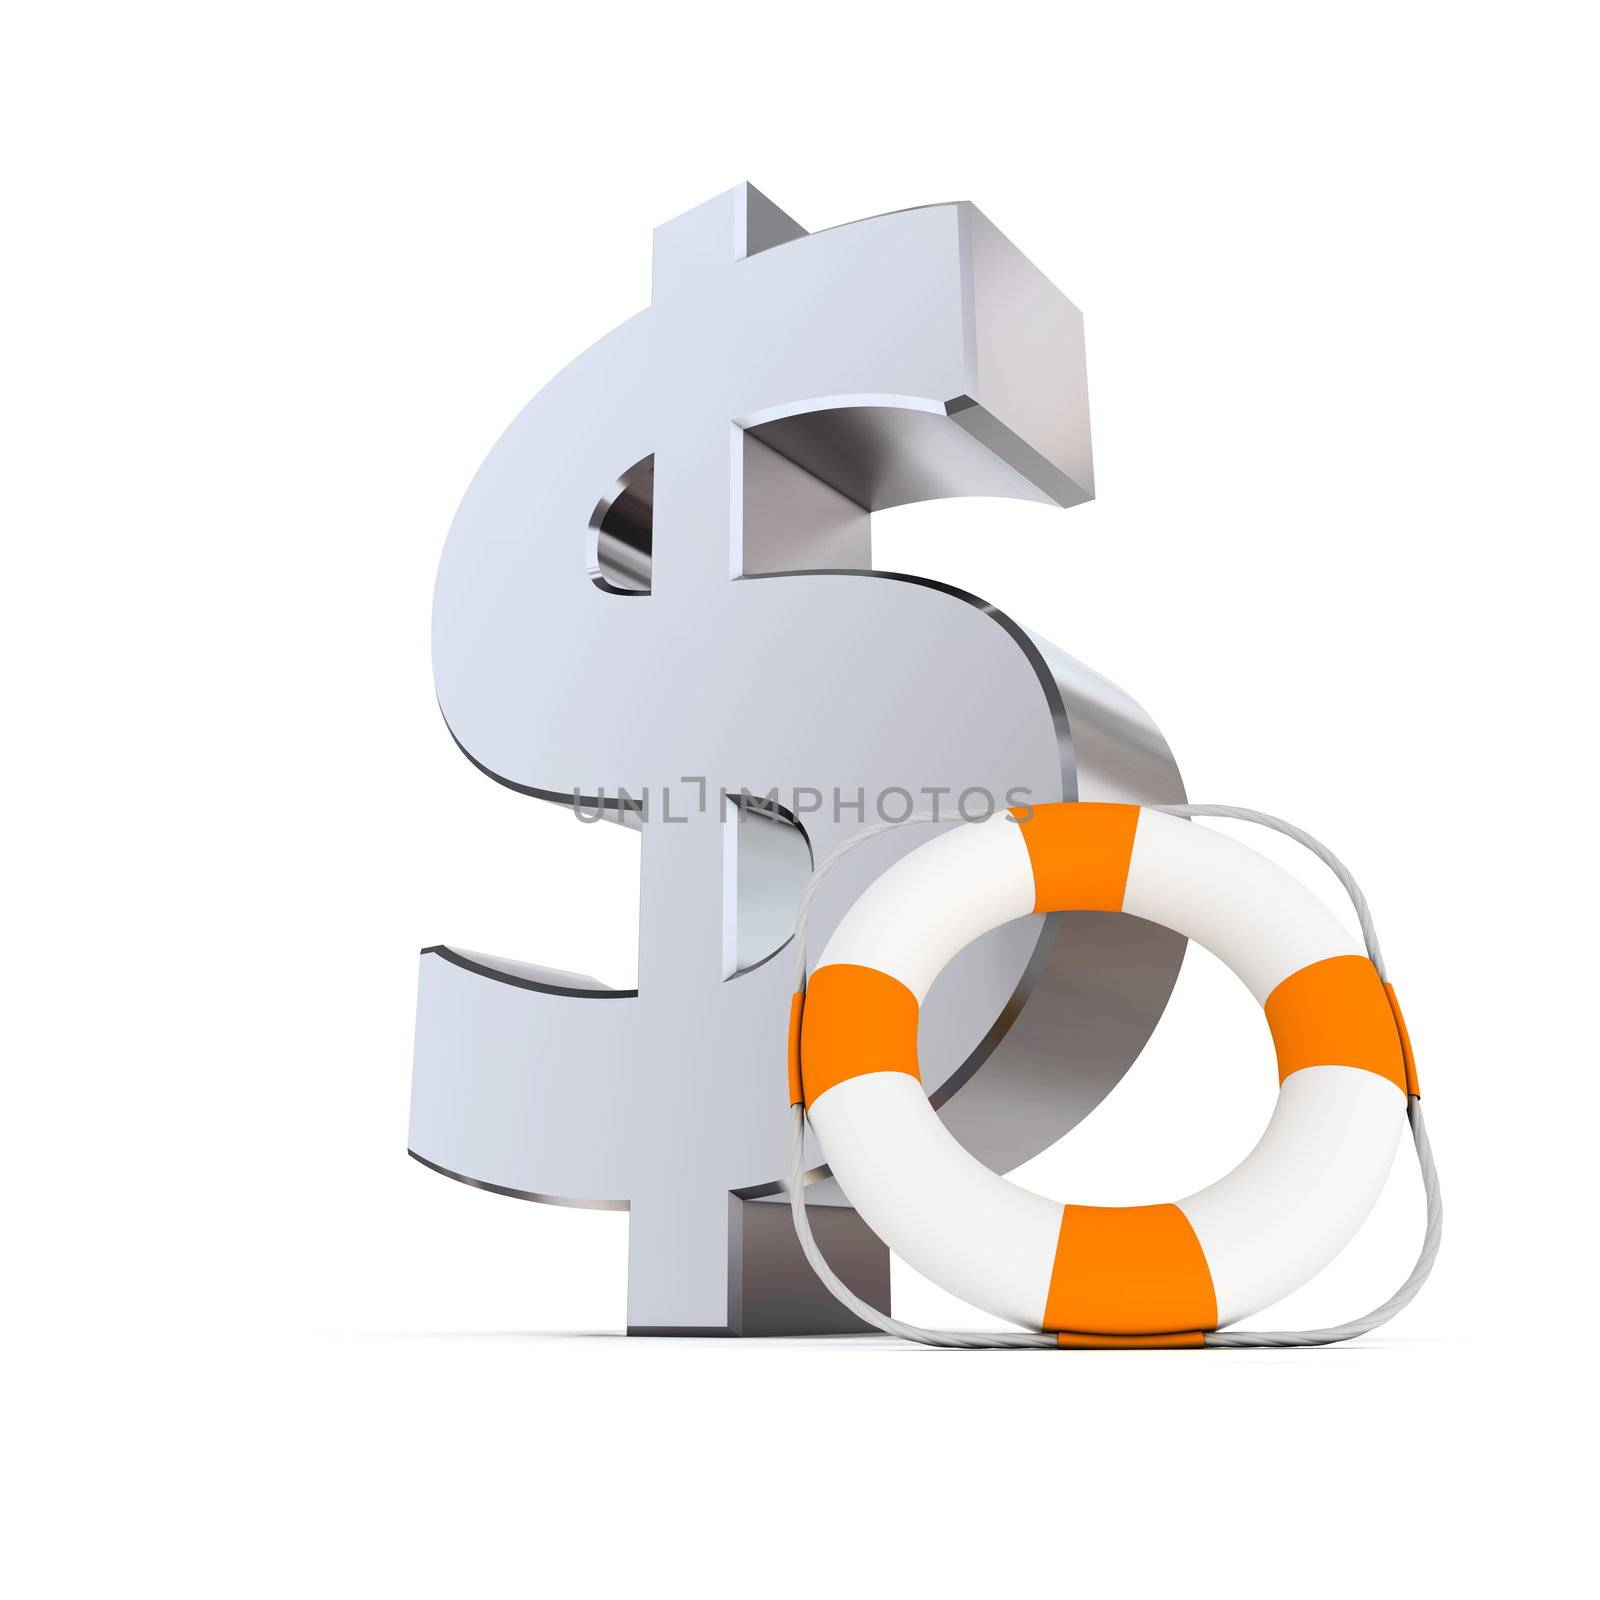 white and orange lifebelt leans on a shiny metallic US-Dollar currency symbol